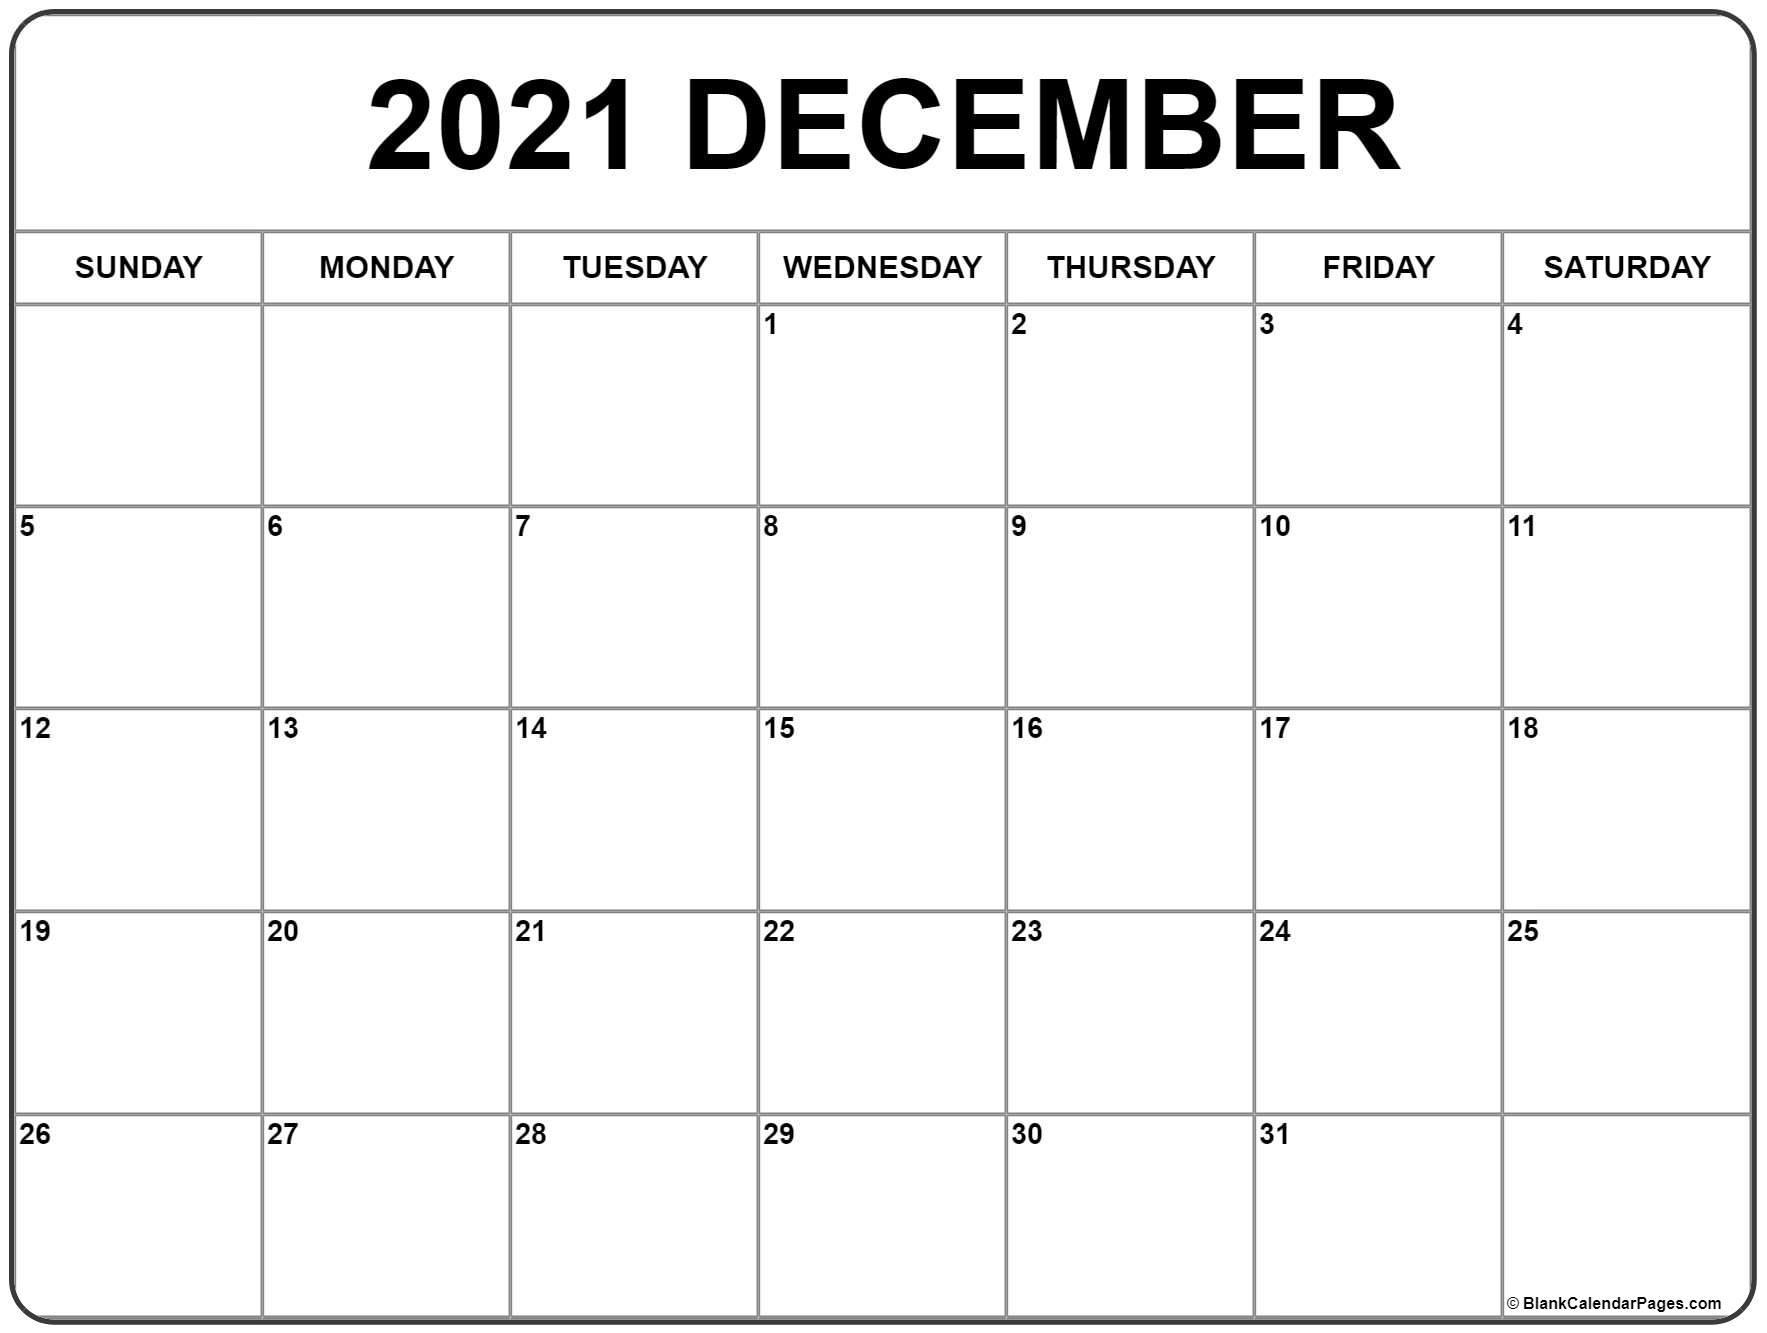 Get 2021 August Thru December Printable Calendar